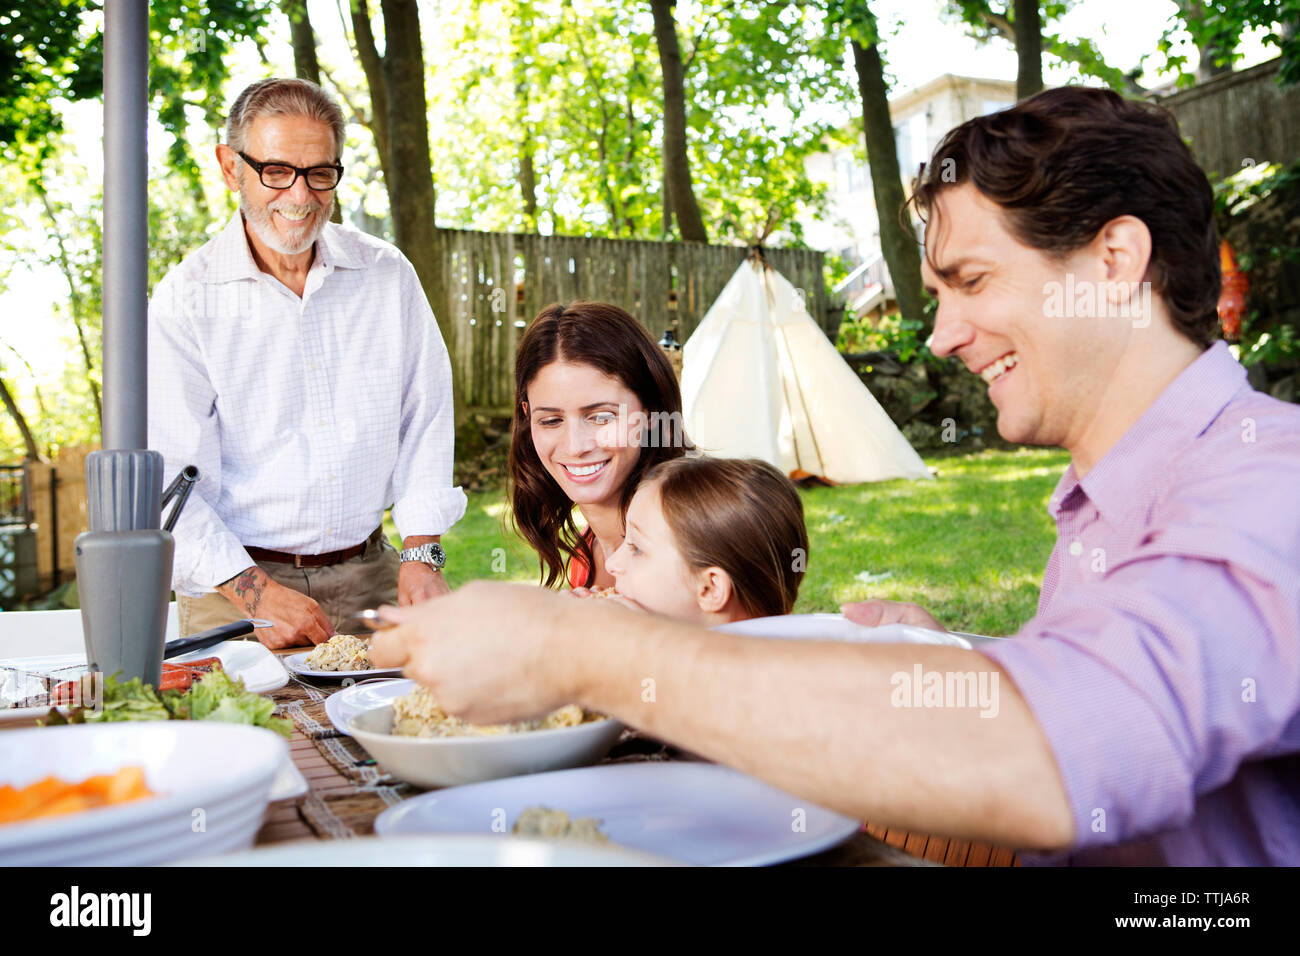 Family enjoying food in lawn Stock Photo